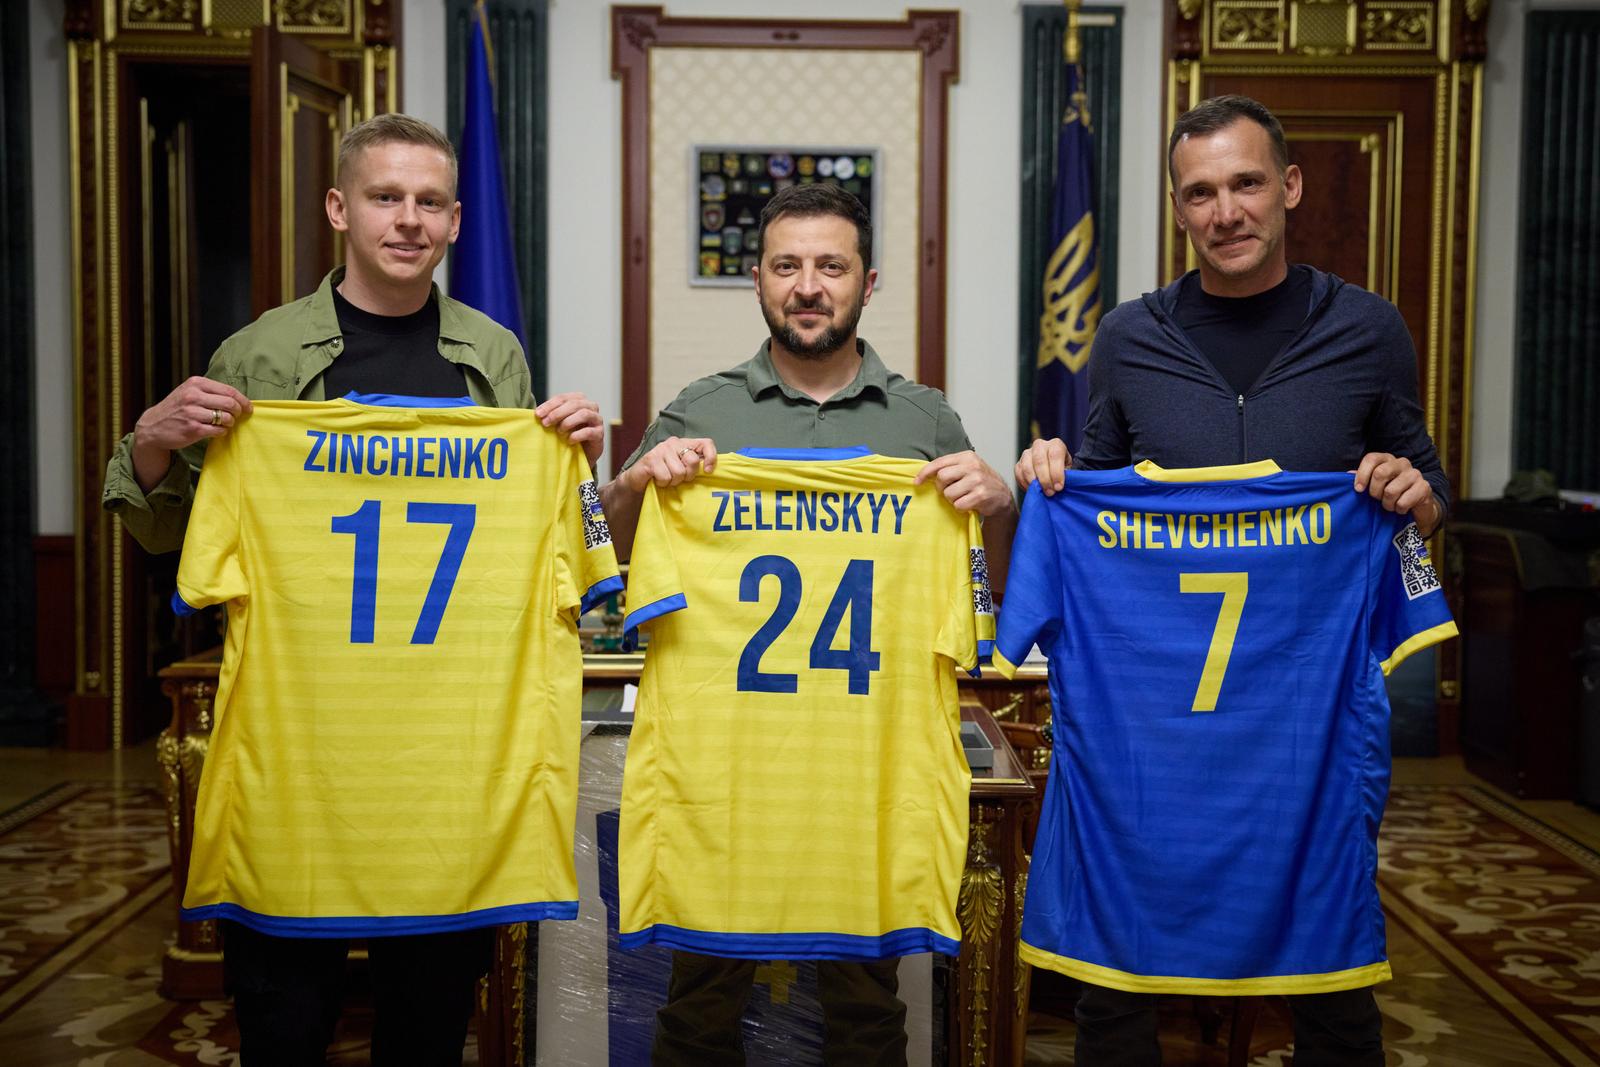 Ukrainian footballers Oleksandr Zinchenko and Andriy Shevchenko, along with President Volodymyr Zelensky